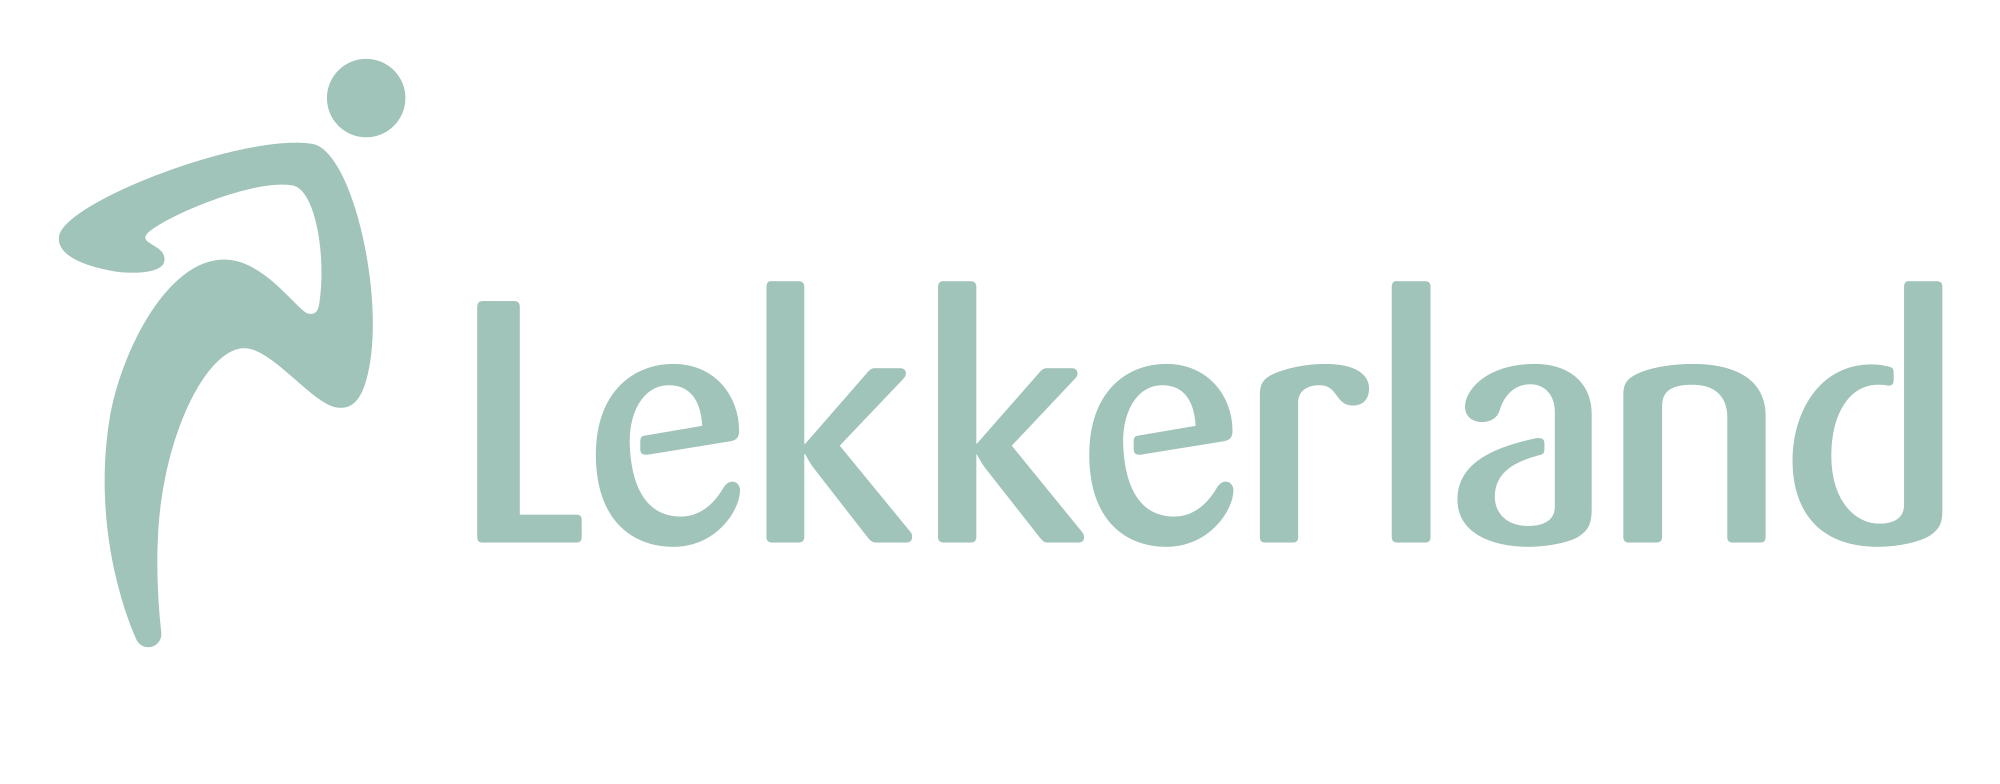 Logo Lekkerland